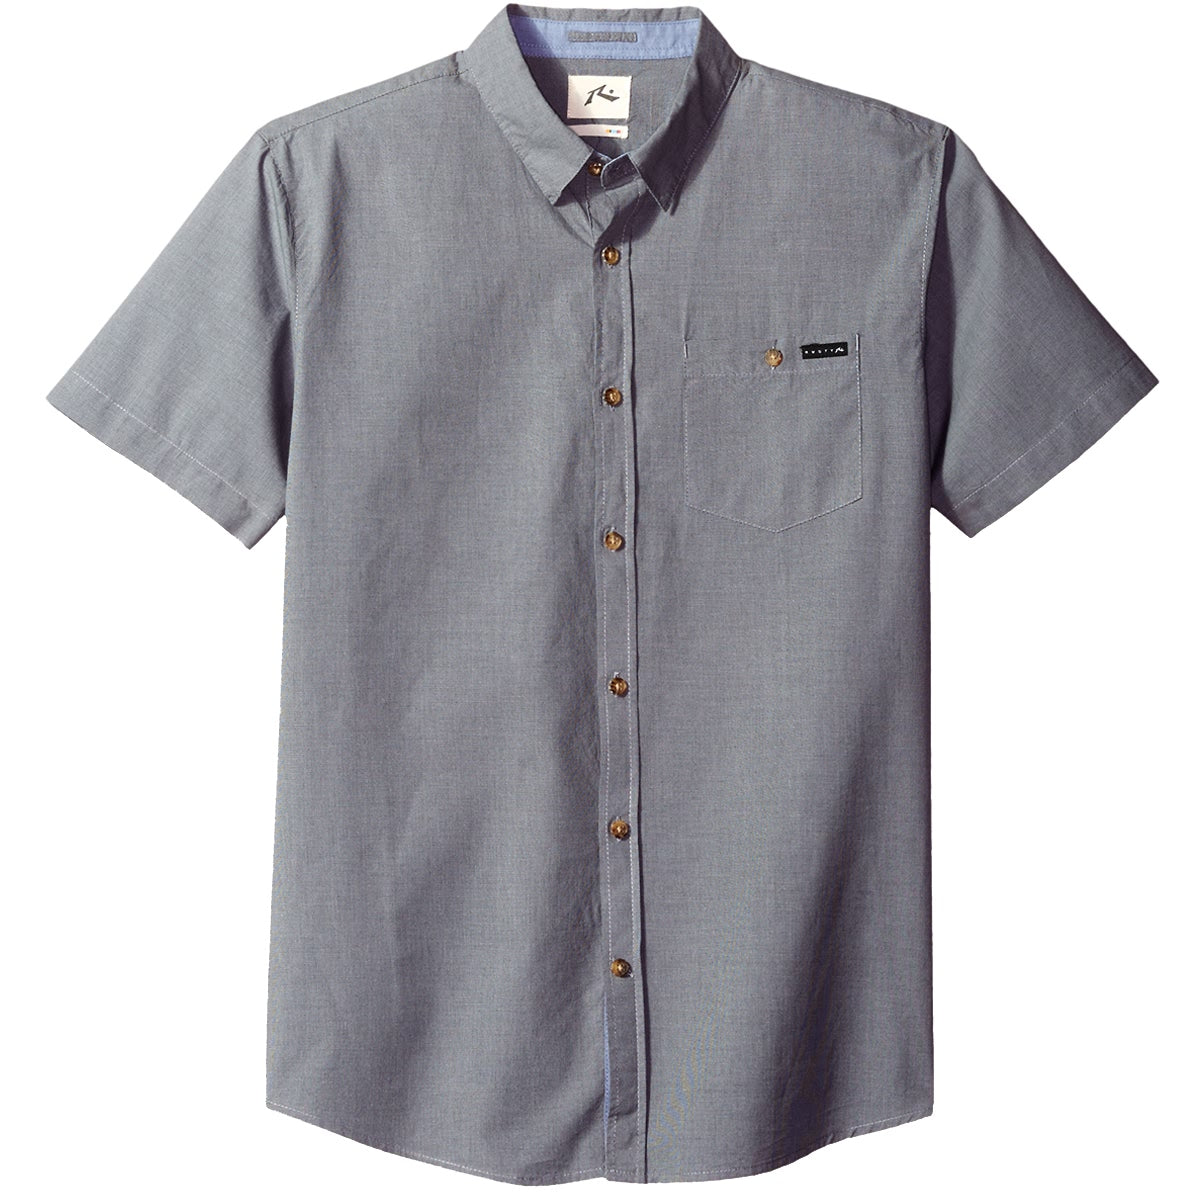 Rusty Sonar Men's Button Up Short-Sleeve Shirts - Coal